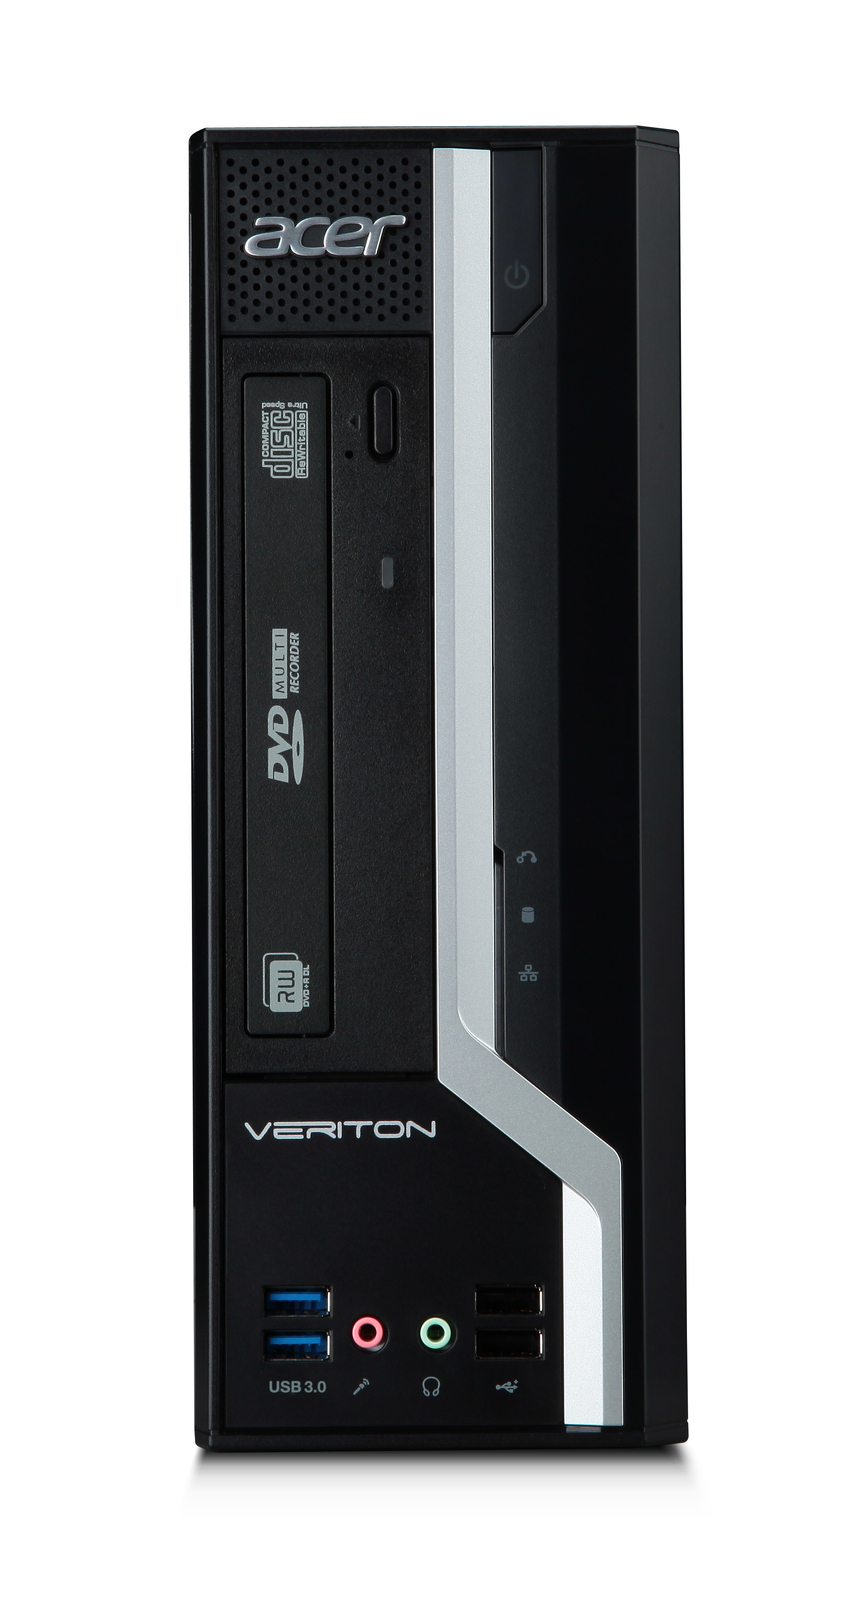 Acer Veriton X4630 SFF Intel i5 4460 3.20GHz 4GB RAM 500GB HDD NO OS Full Size Image